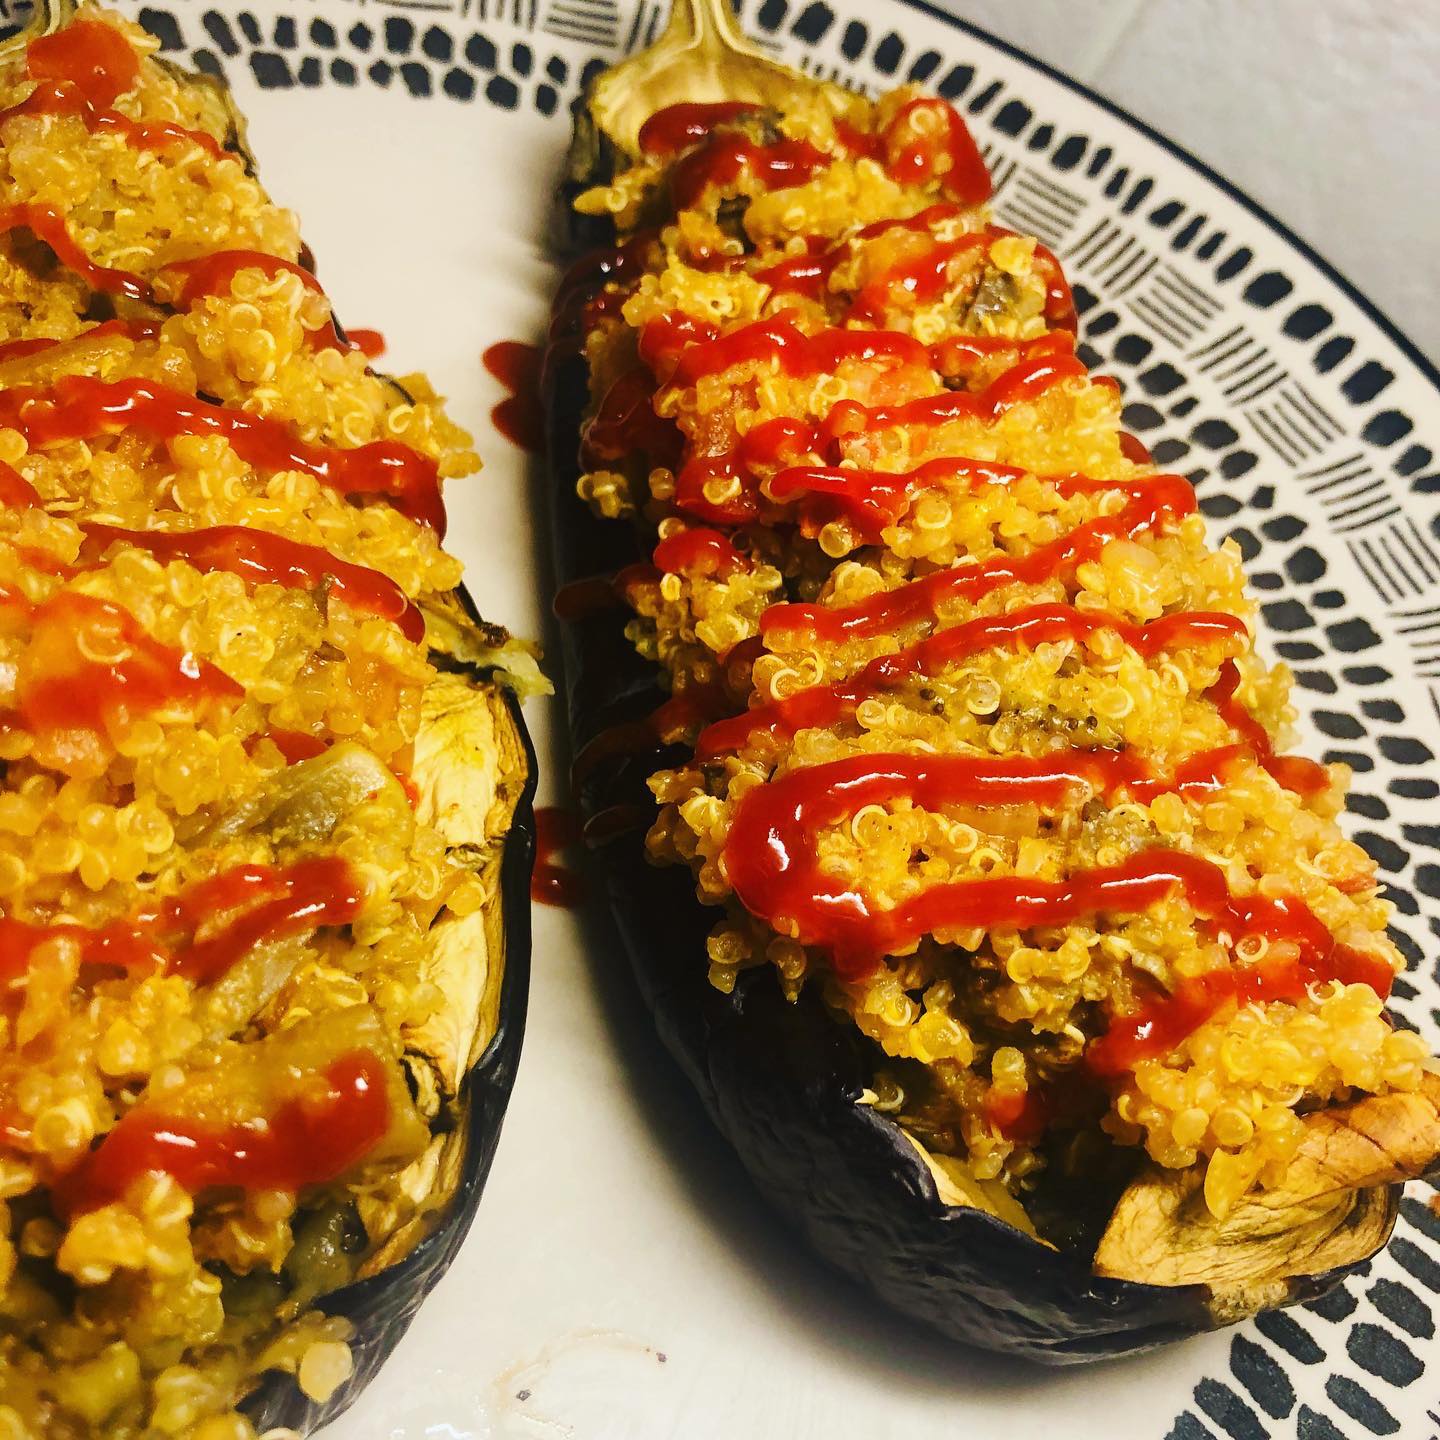 Easy Mediterranean Quinoa Stuffed Eggplant